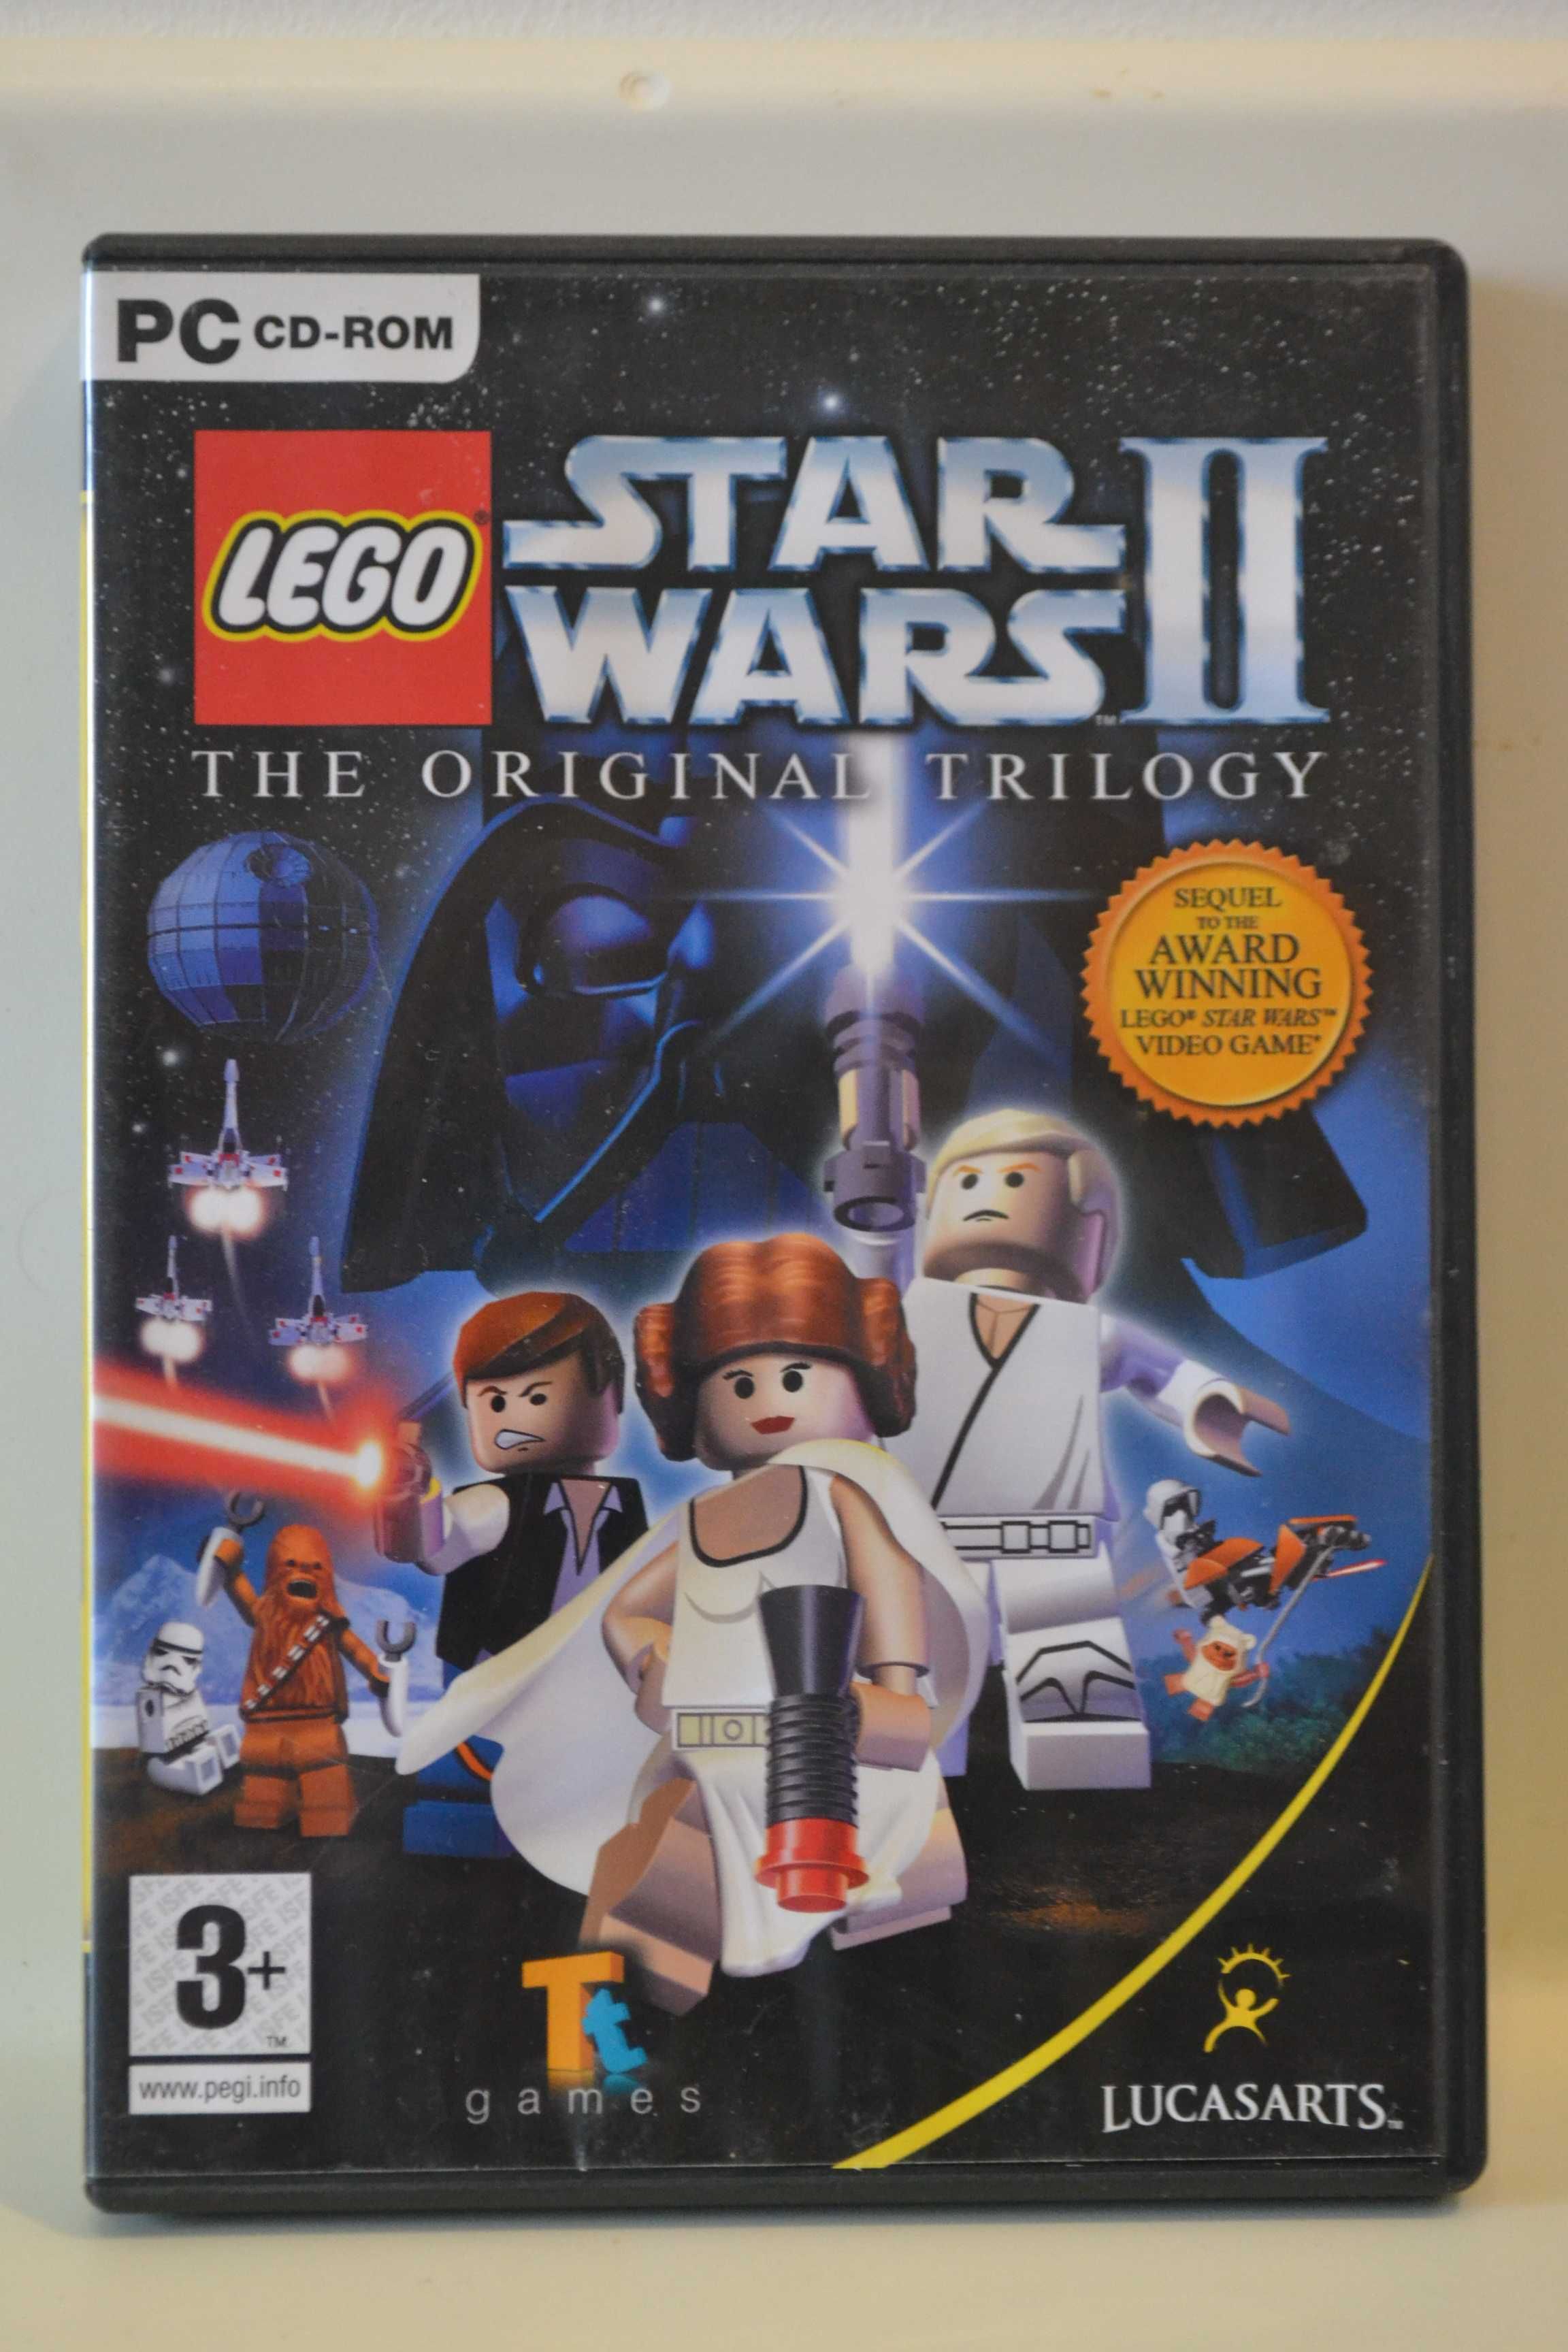 Lego Star Wars II  The Original Trilogy  PC